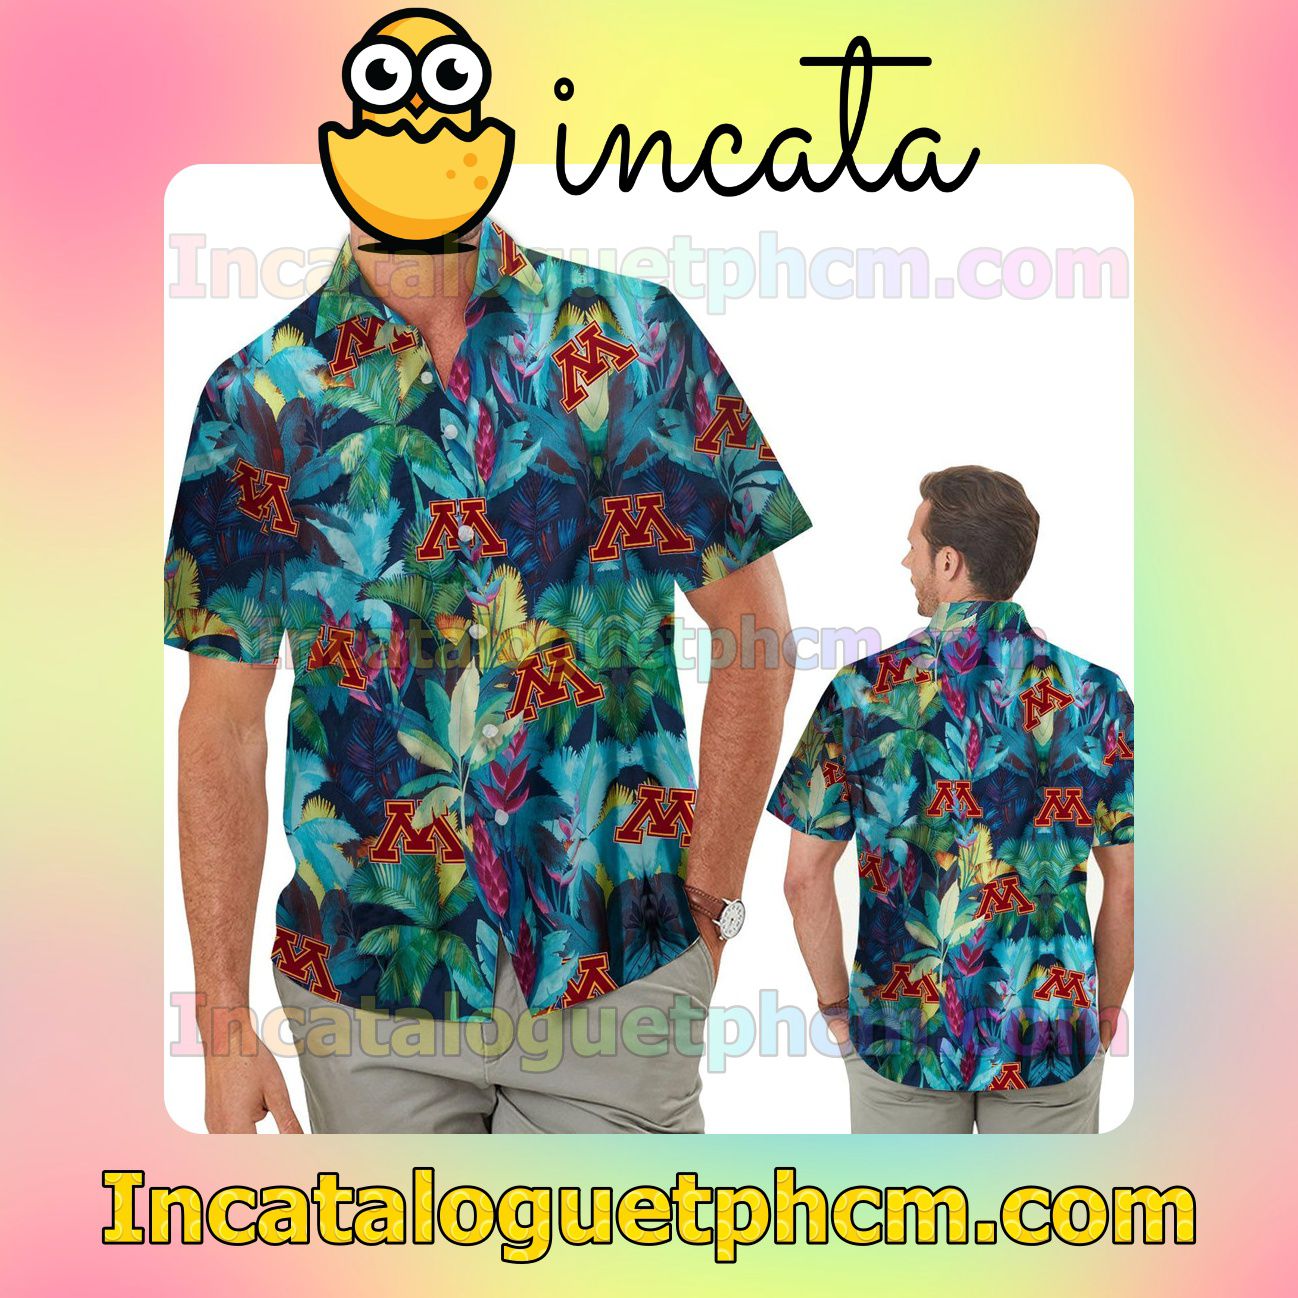 Minnesota Golden Gophers Floral Tropical Beach Vacation Shirt, Swim Shorts